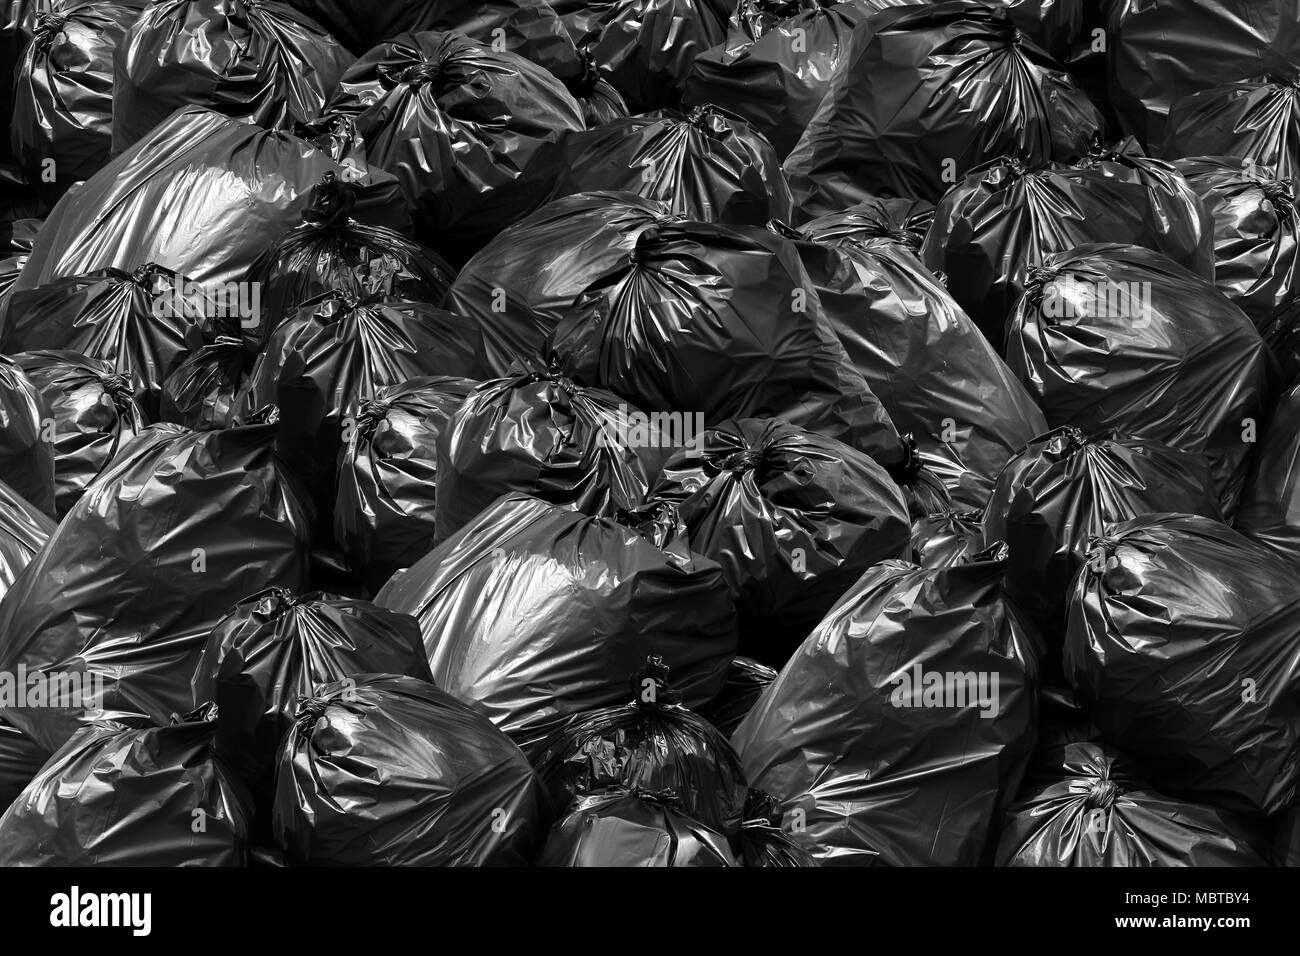 https://c8.alamy.com/comp/MBTBY4/background-garbage-bag-black-bin-garbage-dump-bintrash-garbage-rubbish-plastic-bags-pile-junk-garbage-trash-texture-MBTBY4.jpg